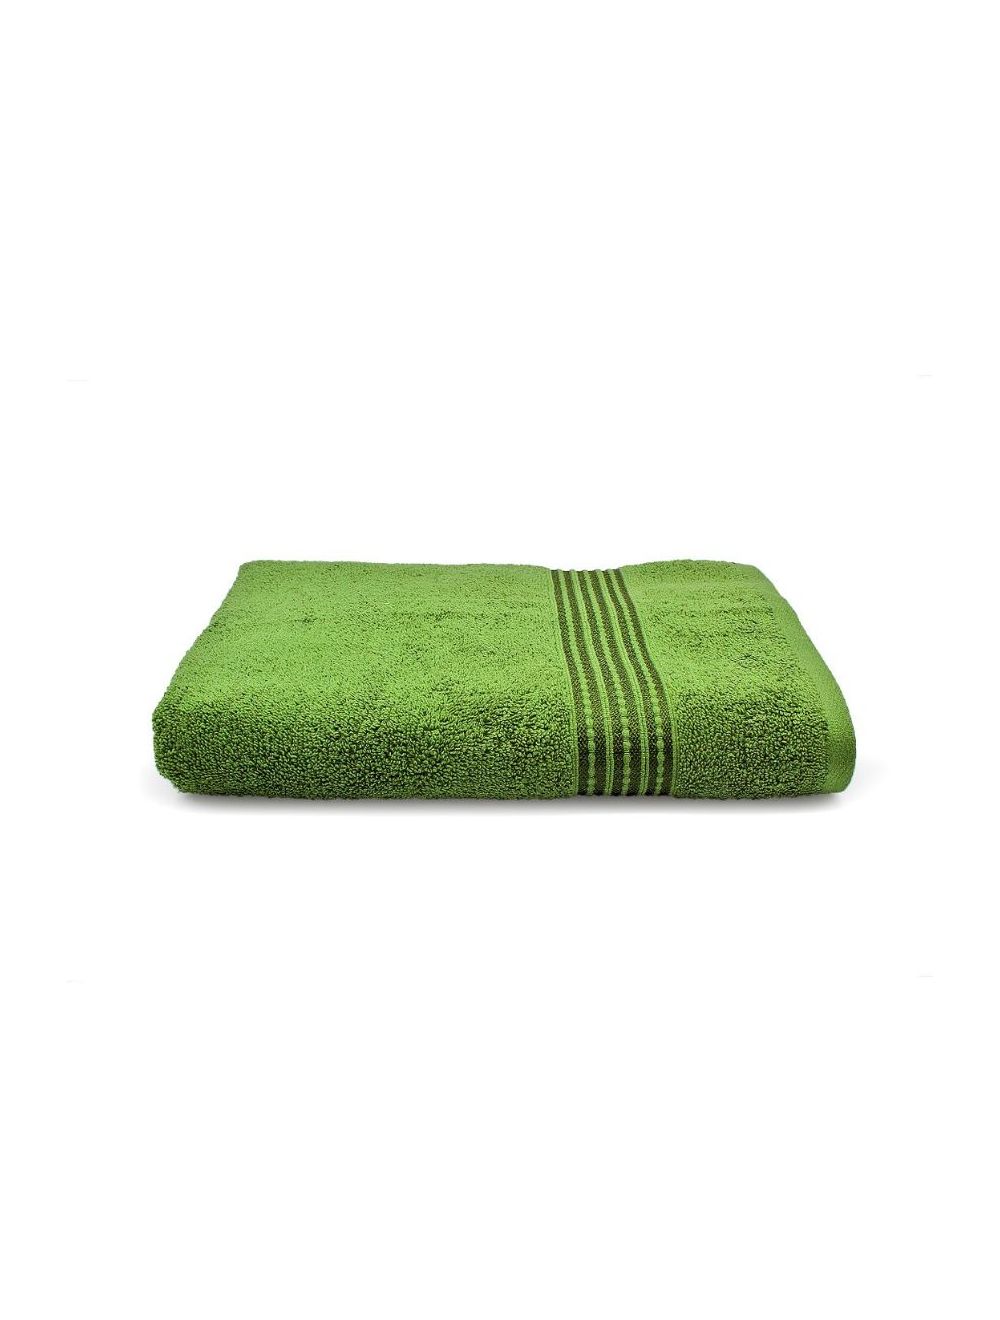 Rahalife 100% Cotton Bath Towel, Classic Collection, Green -14RLBT001